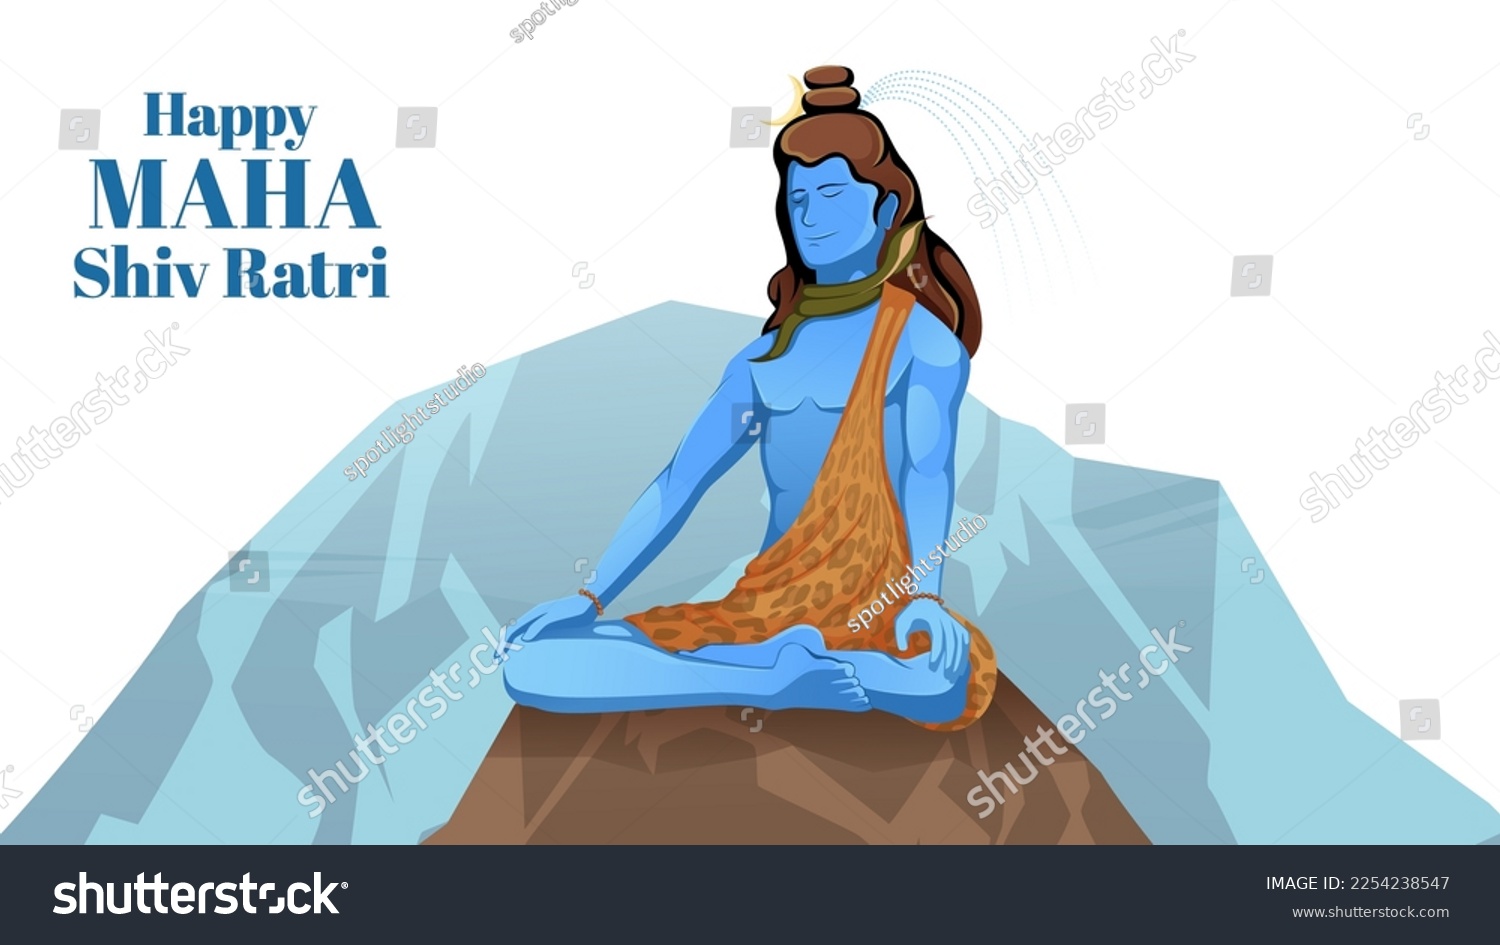 SVG of Lord shiva in meditation pose, Happy Maha Shivratri vector illustration. svg